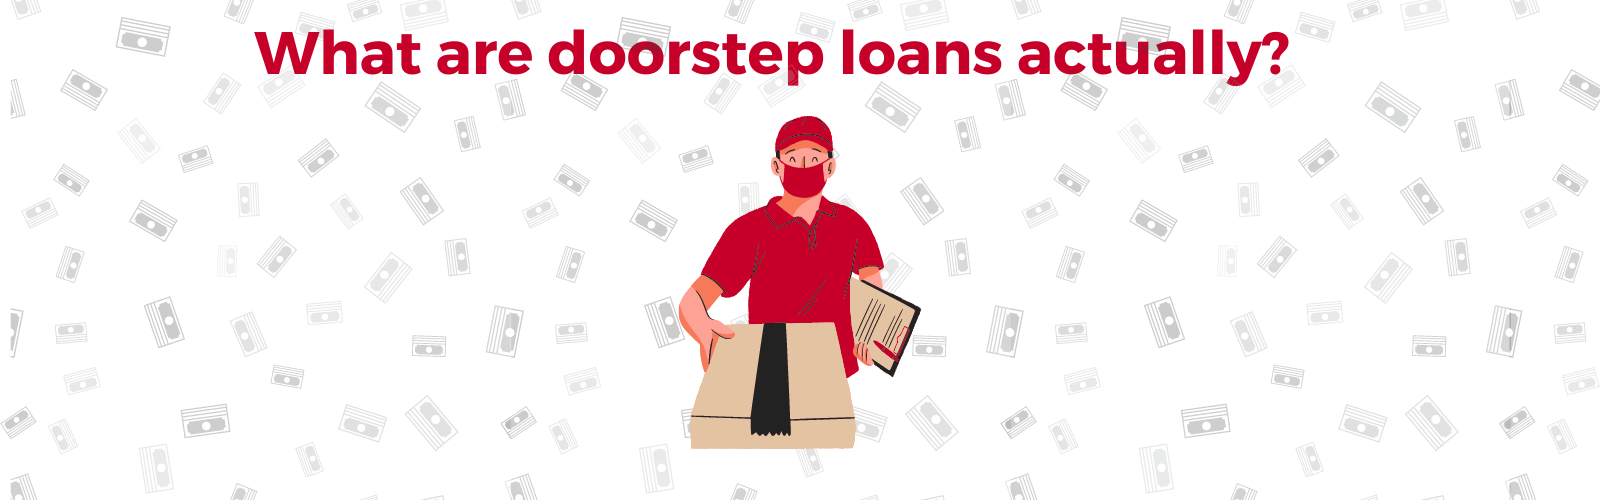 Doorstep Loan Personal Loan